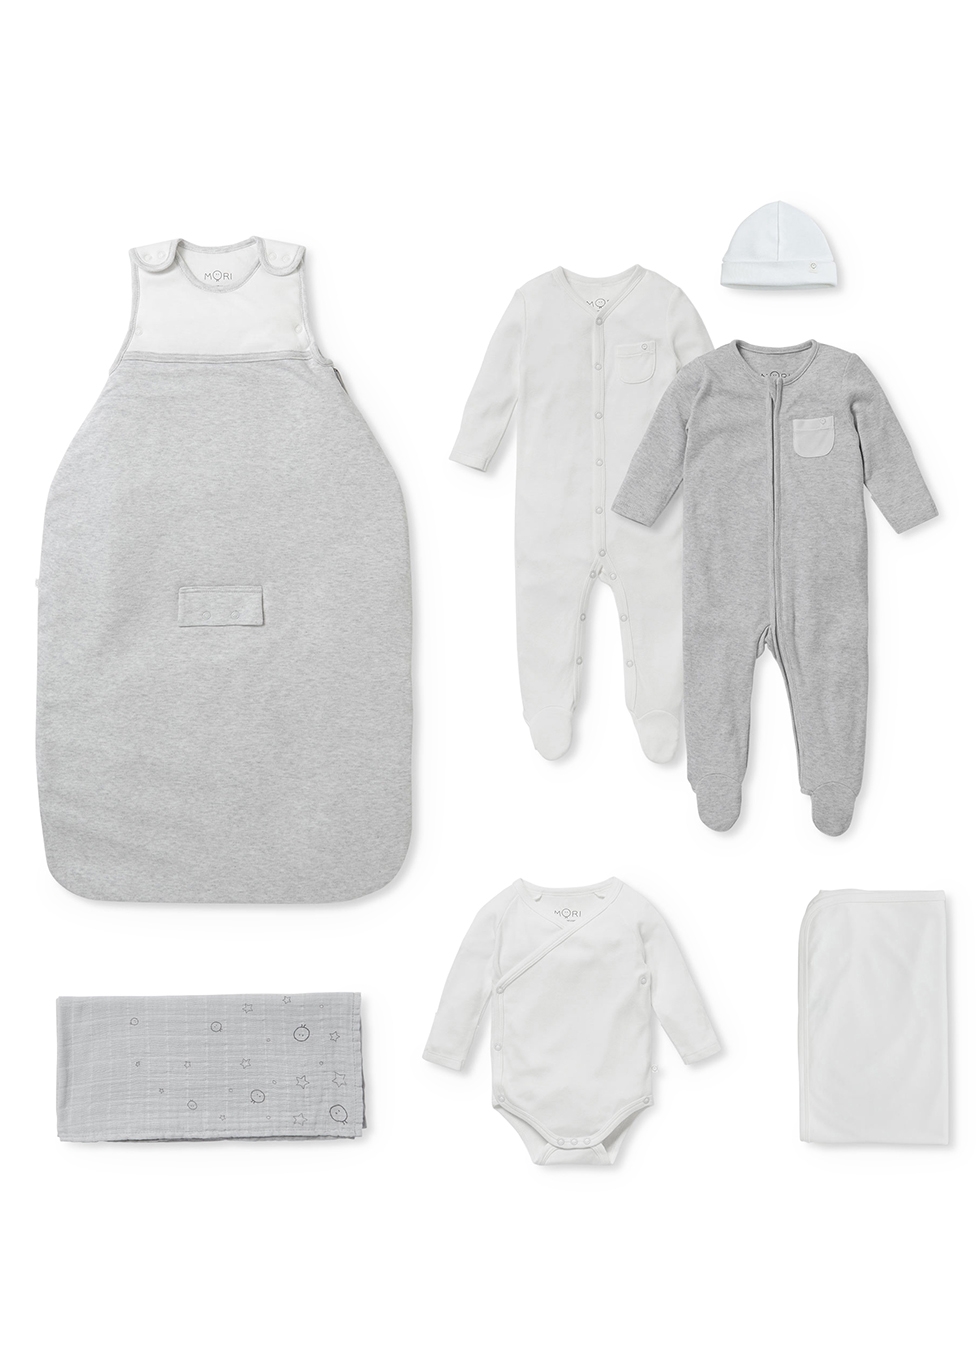 Mori Babies' My First Summer White And Grey Jersey Sleep Set